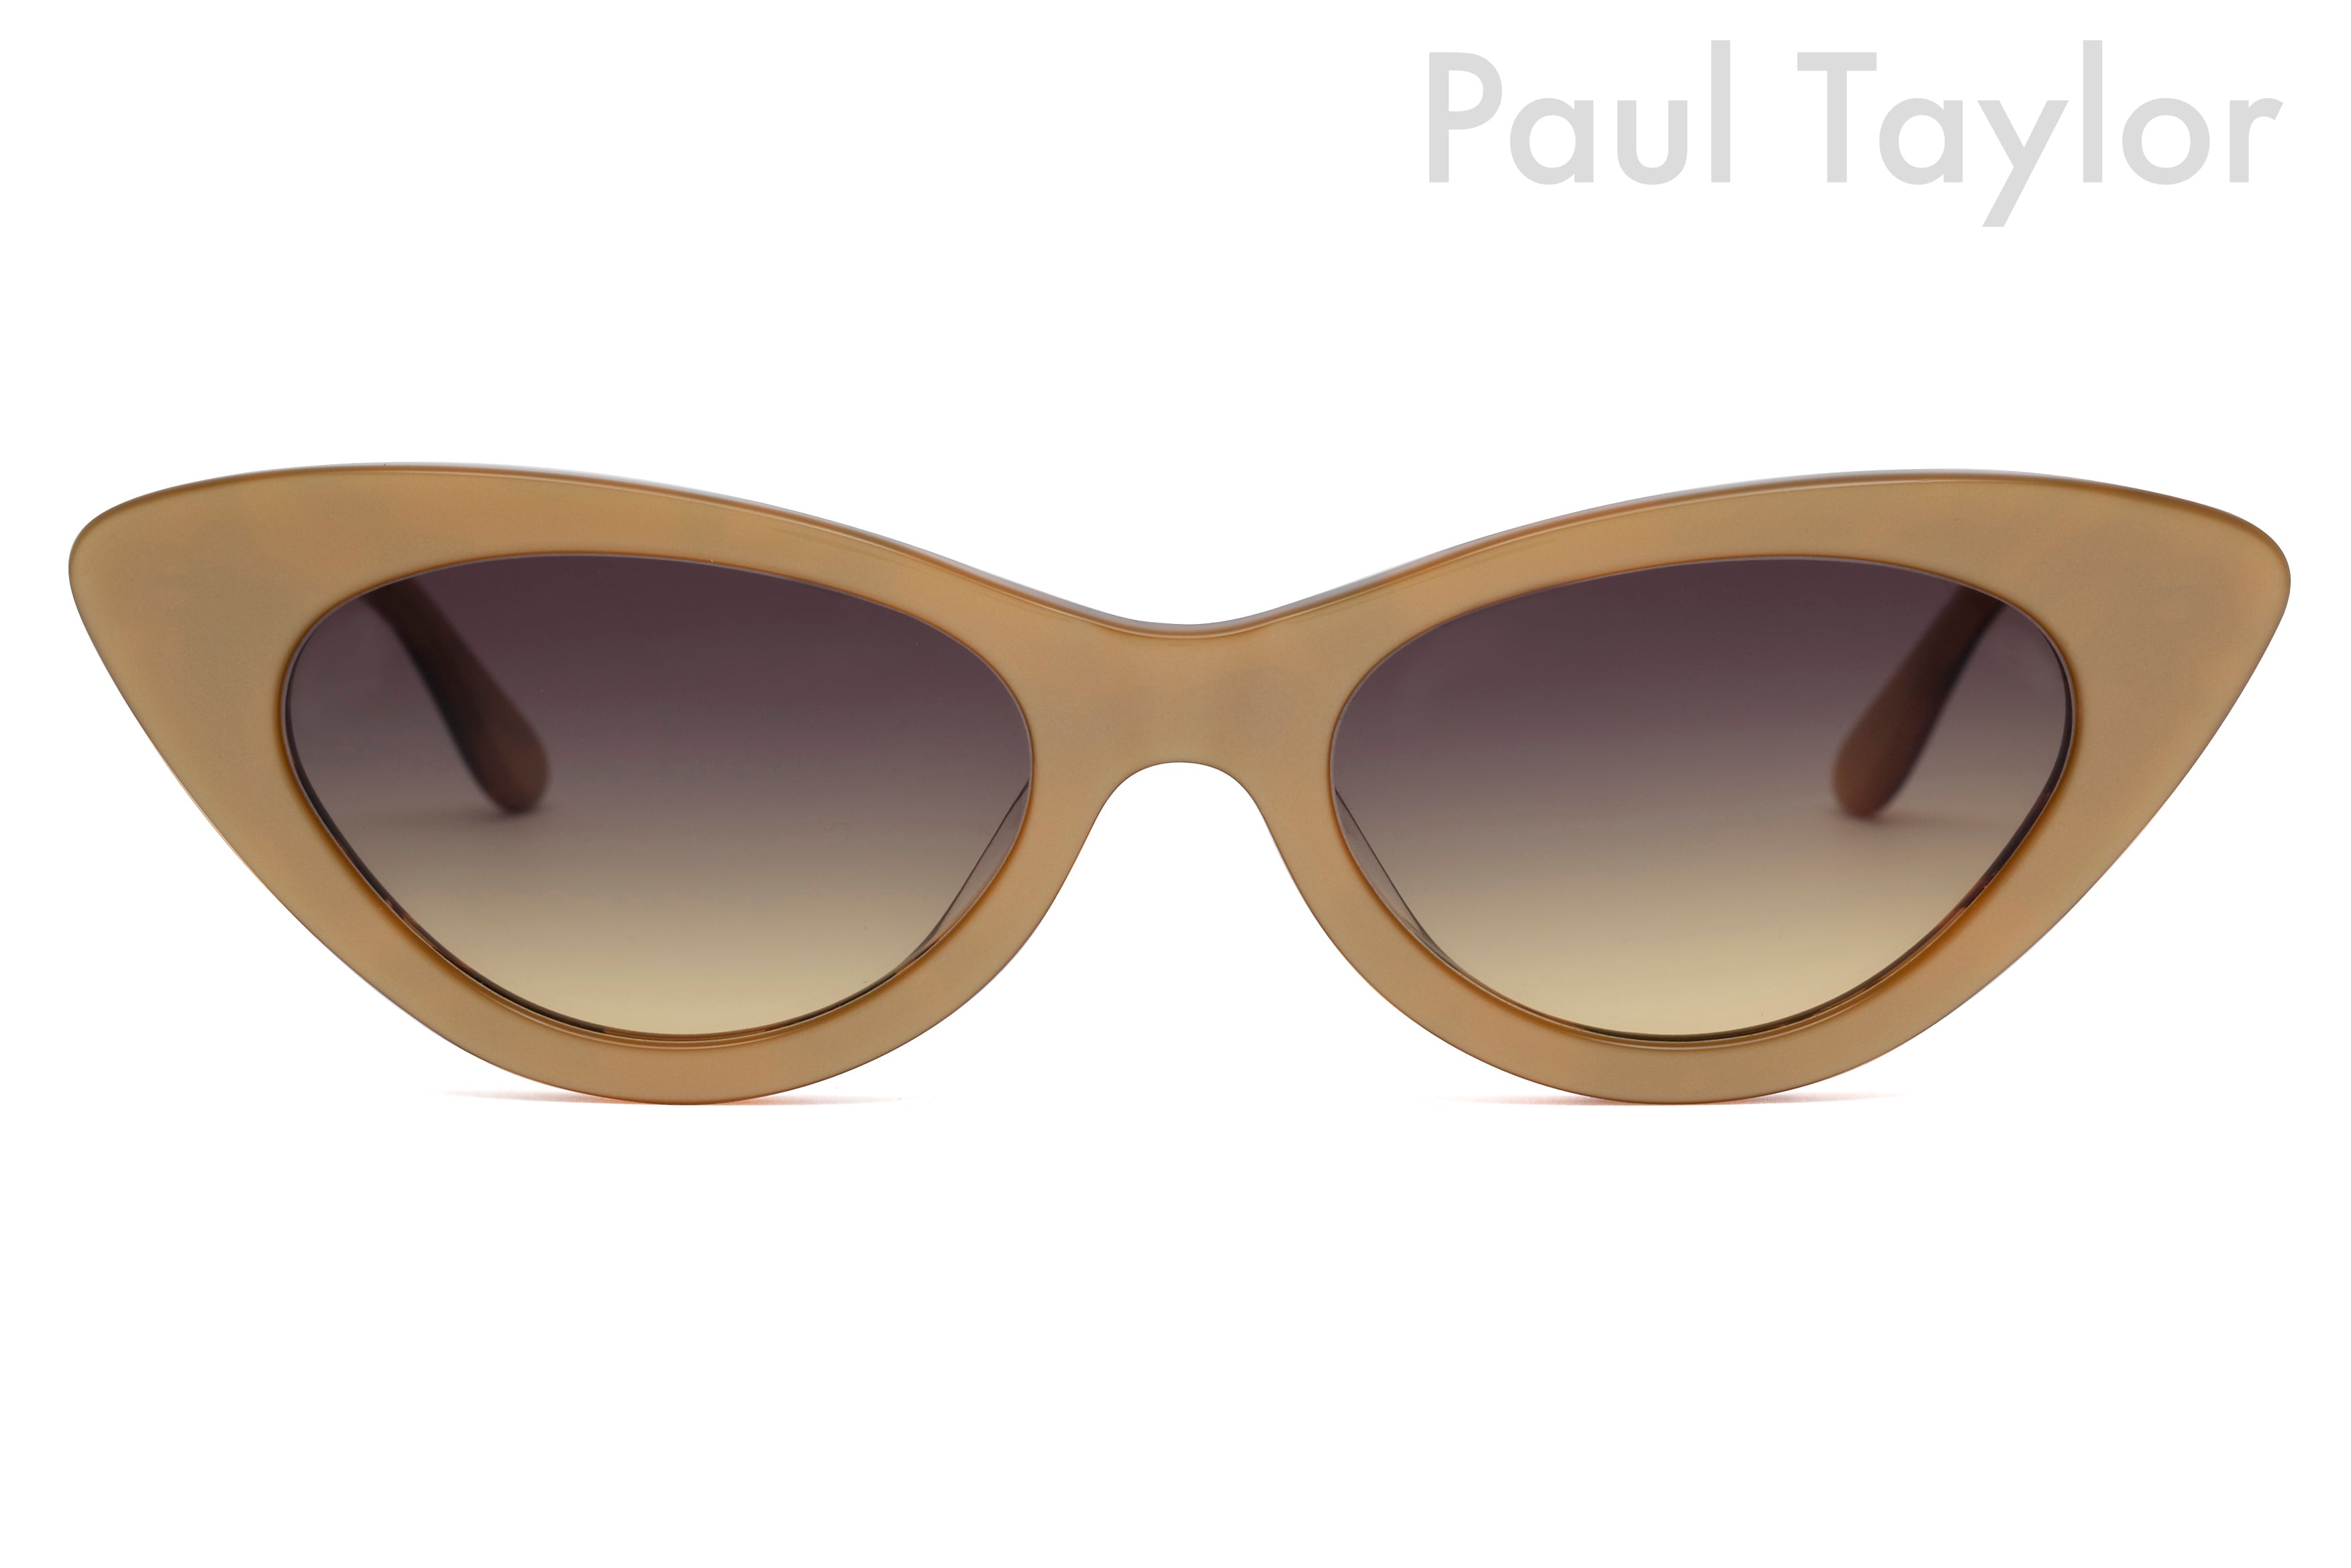 AUDREY Sunglasses YWG Golden Light Bronzed FRONT with Golden Honey Tortoiseshell TEMPLES - Paul Taylor Eyewear